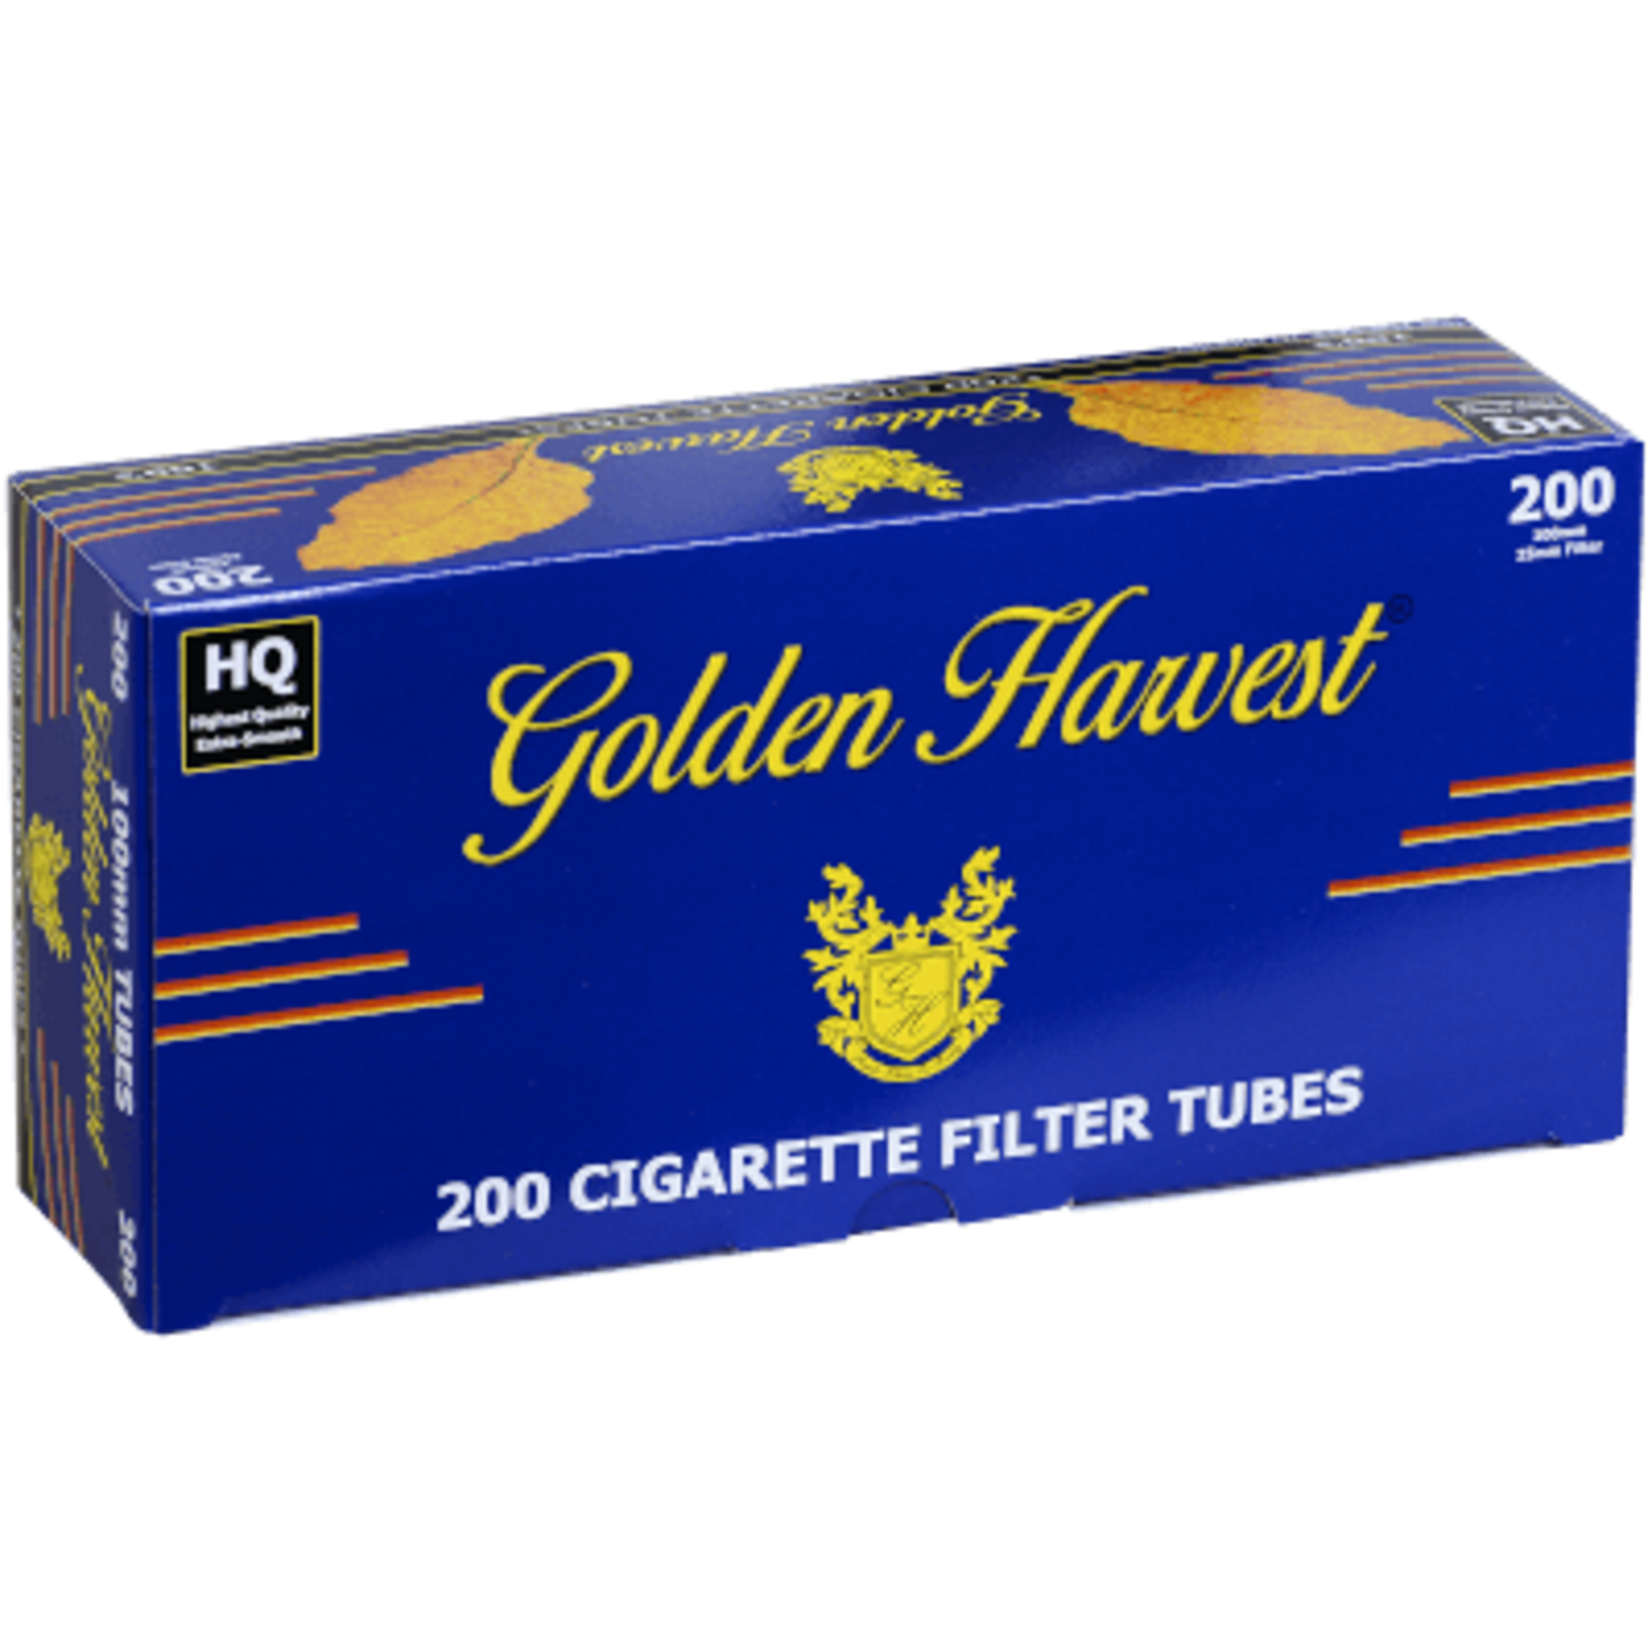 Golden Harvest Golden Harvest Tubes 200ct. Carton